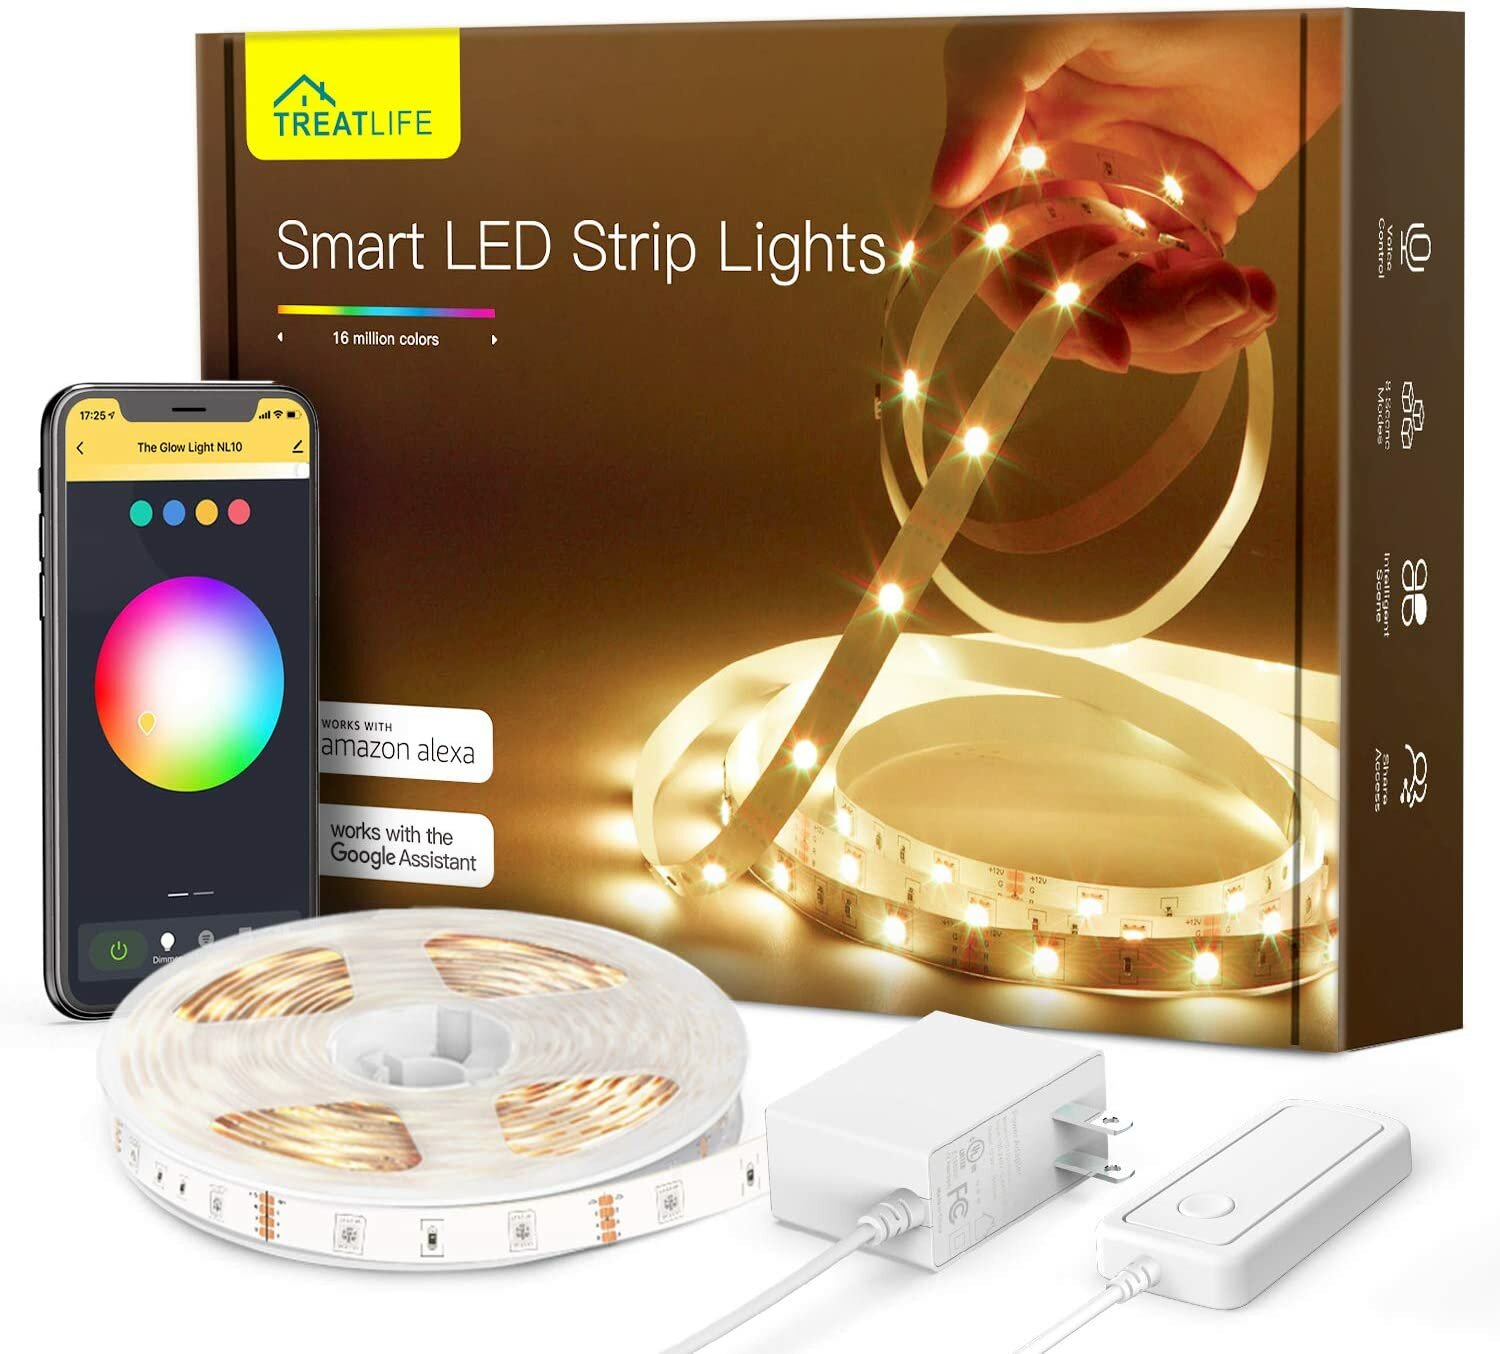 

TREATLIFE ST10 Smart Led Strip Lights, 16.4ft Color Changing WiFi RGB LED Lights TV Backlight, Compatible with Alexa, Go